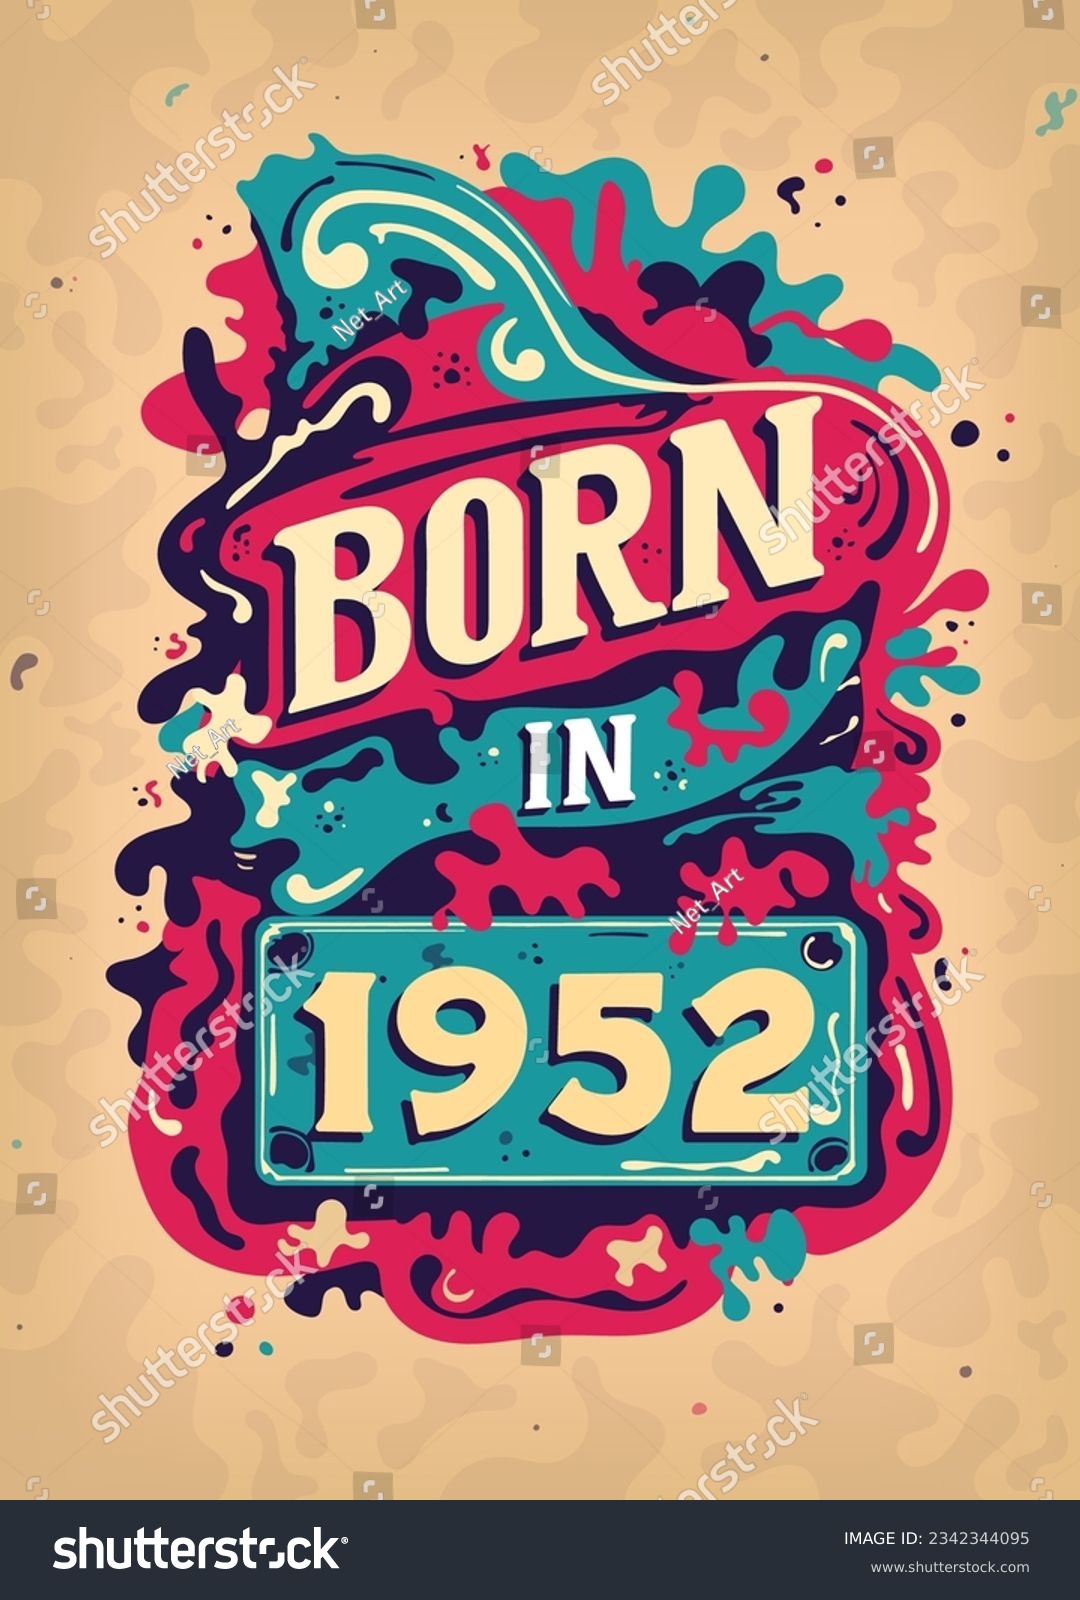 SVG of Born In 1952 Colorful Vintage T-shirt - Born in 1952 Vintage Birthday Poster Design. svg